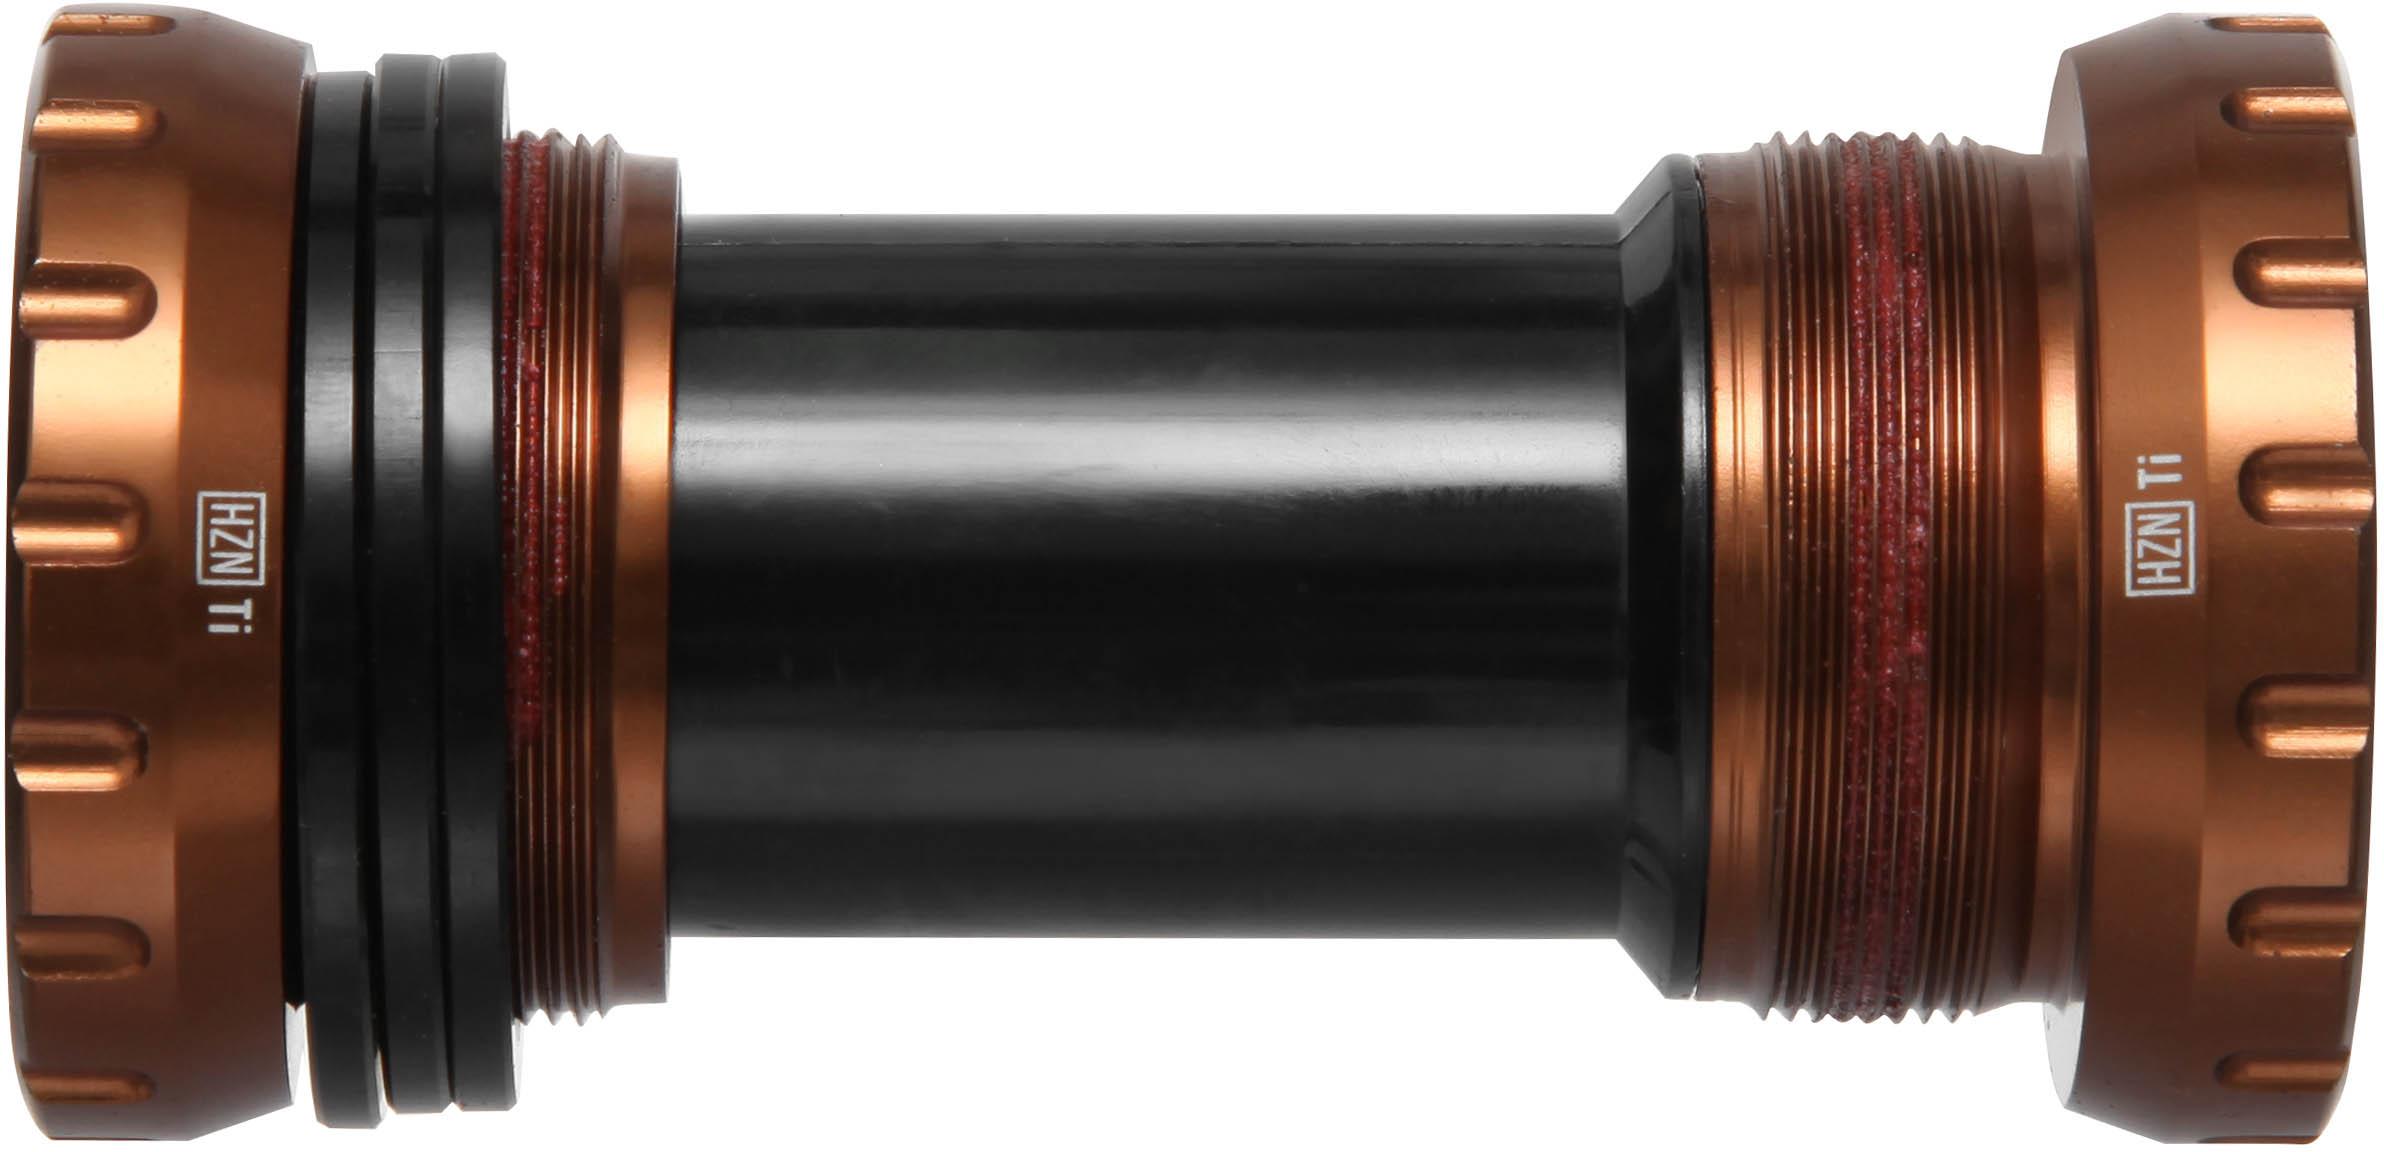 Nukeproof Horizon Shimano Bottom Bracket (24mm) - Copper